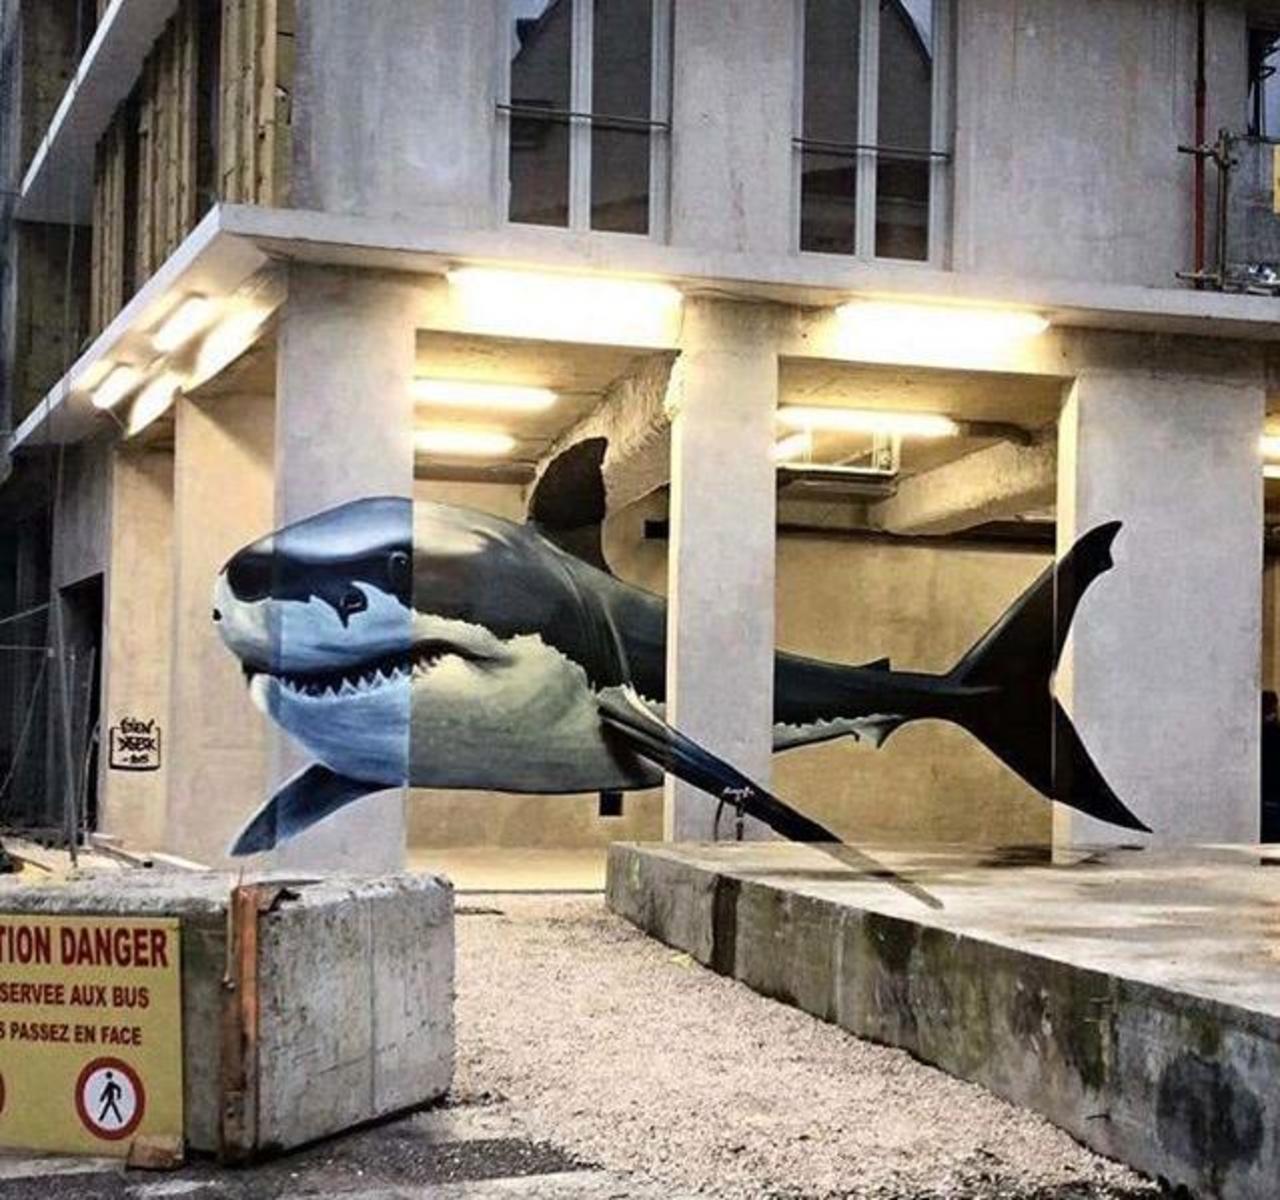 Diseck - Grenoble
#3D #art #graffiti #streetart http://t.co/0O03VqtRJ9
Via @GoogleStreetArt